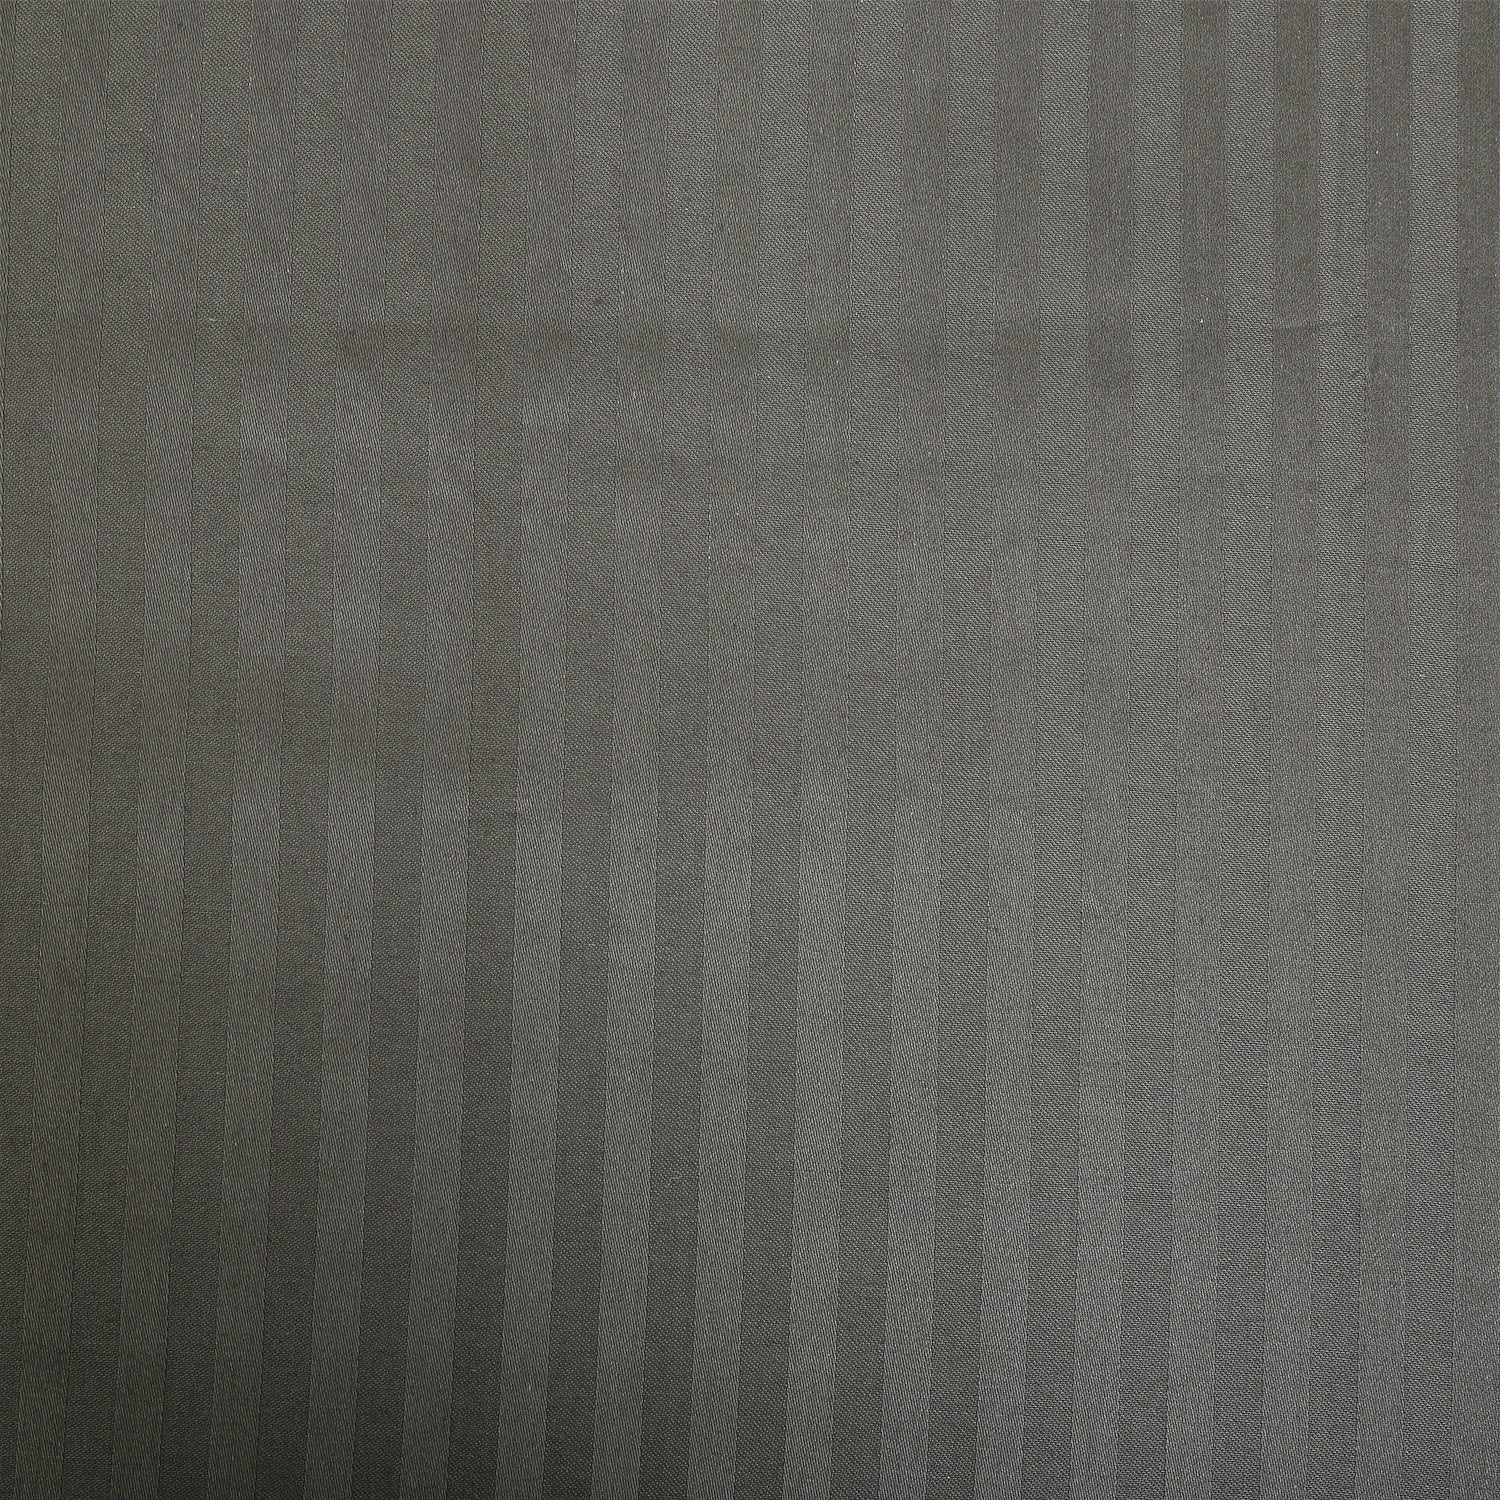 Plain Bedsheet - Double Bed - Grey